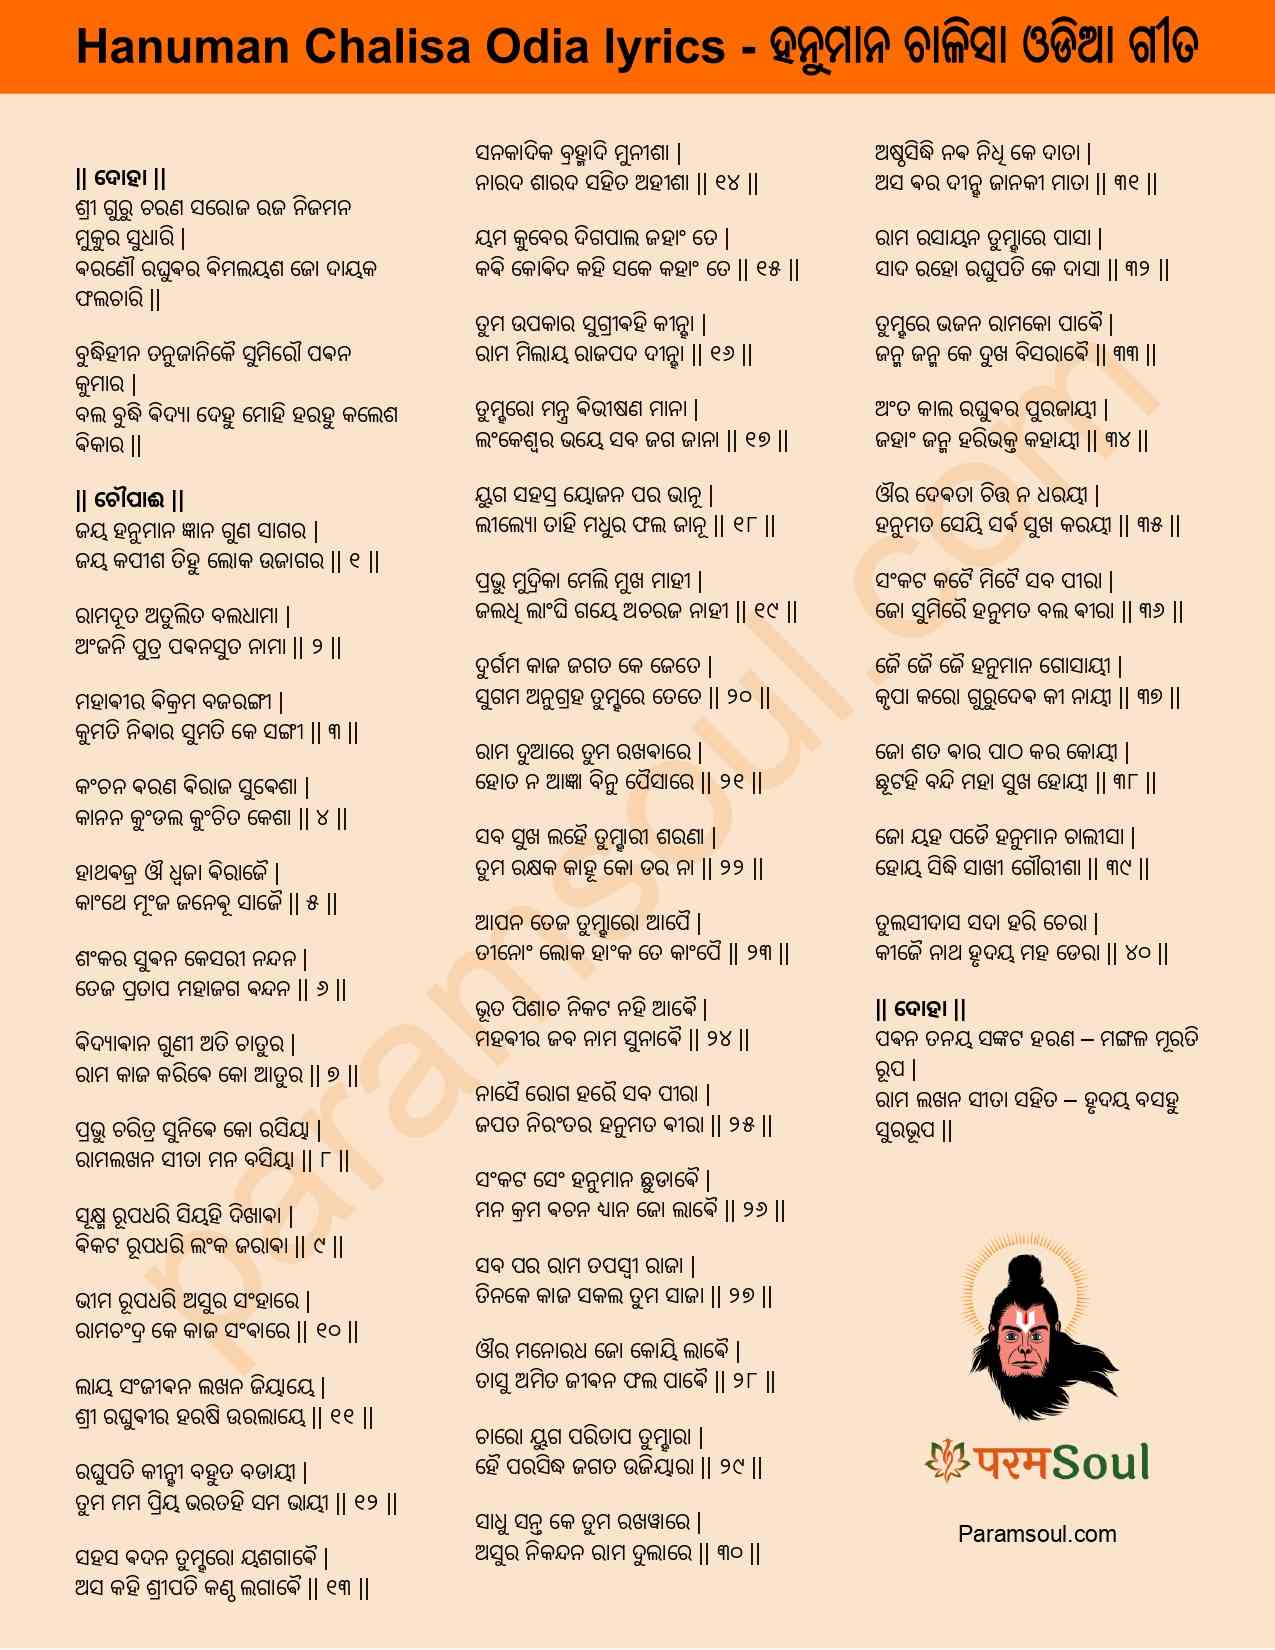 Hanuman Chalisa Odia lyrics Image - ହନୁମାନ ଚାଳିସା ଓଡିଆ ଗୀତ ପ୍ରତିଛବି